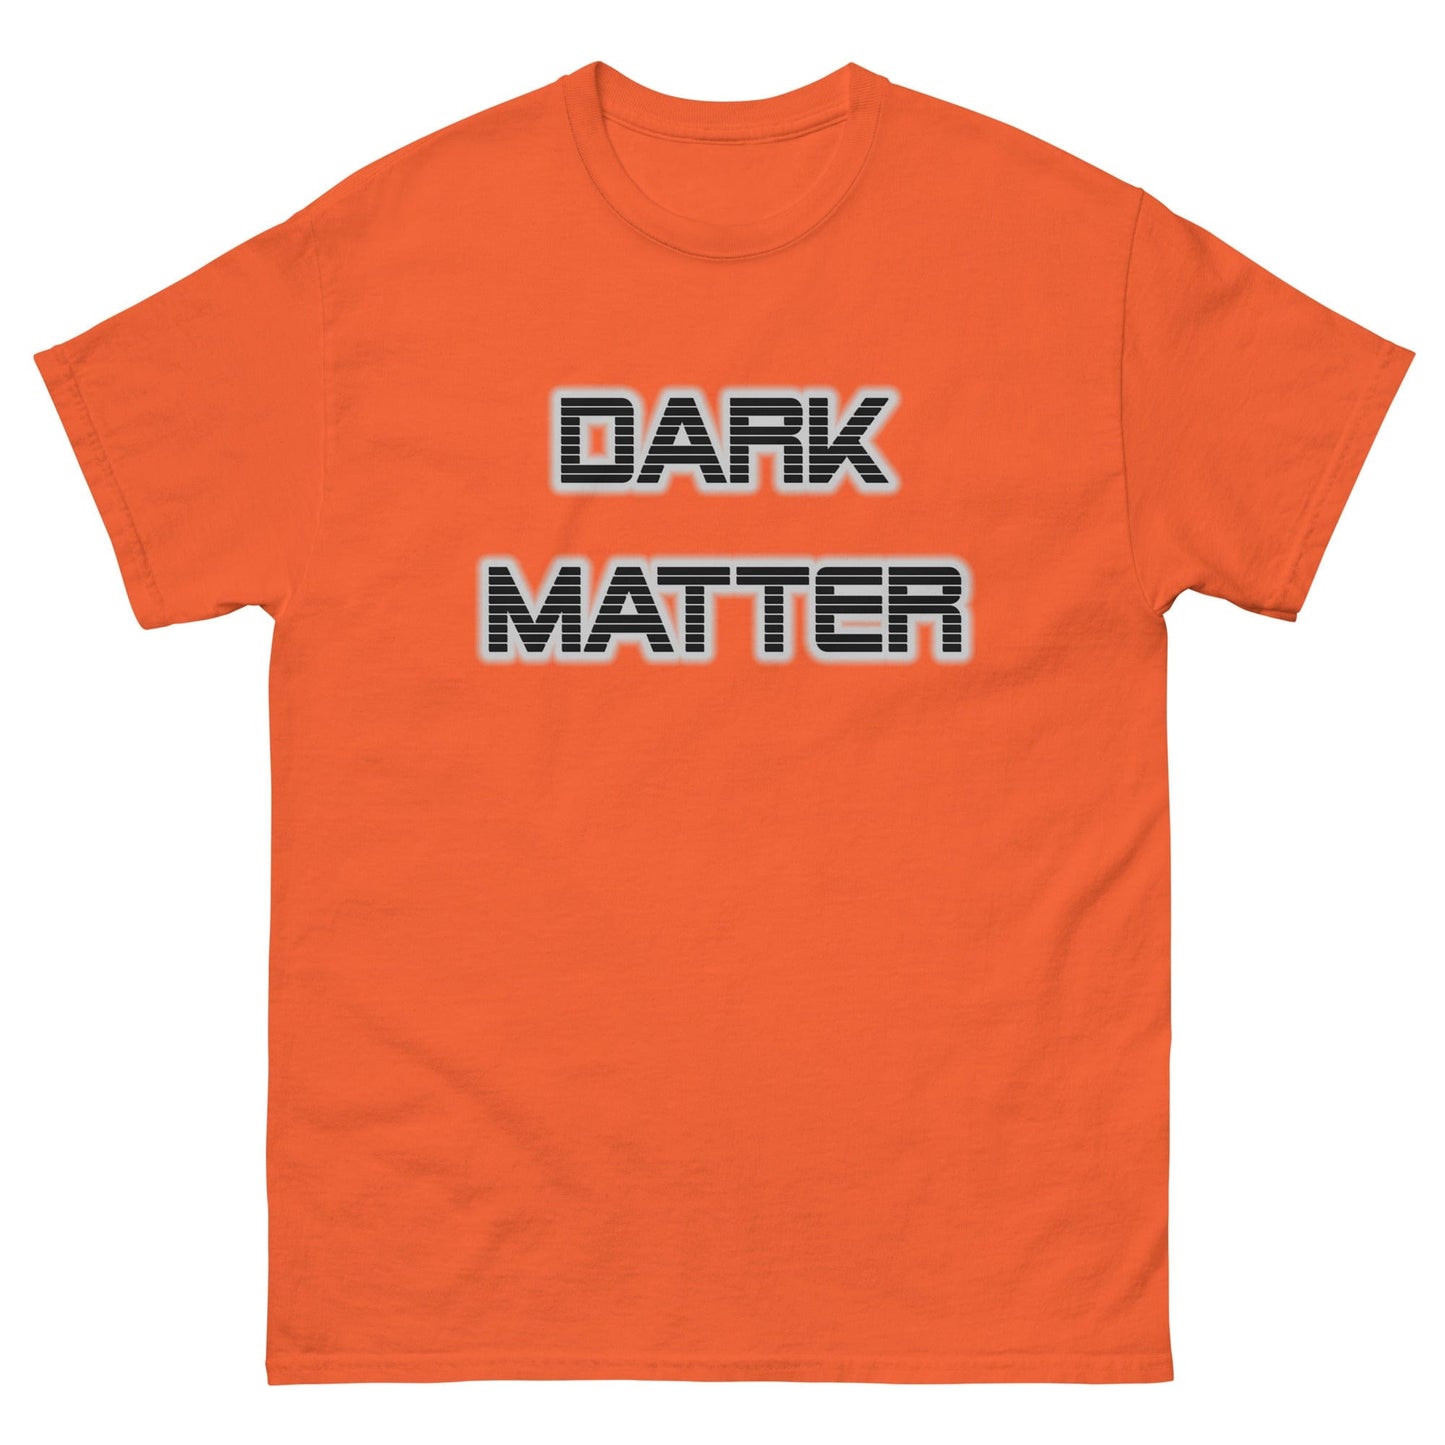 Dark Matter T-shirt Orange / S